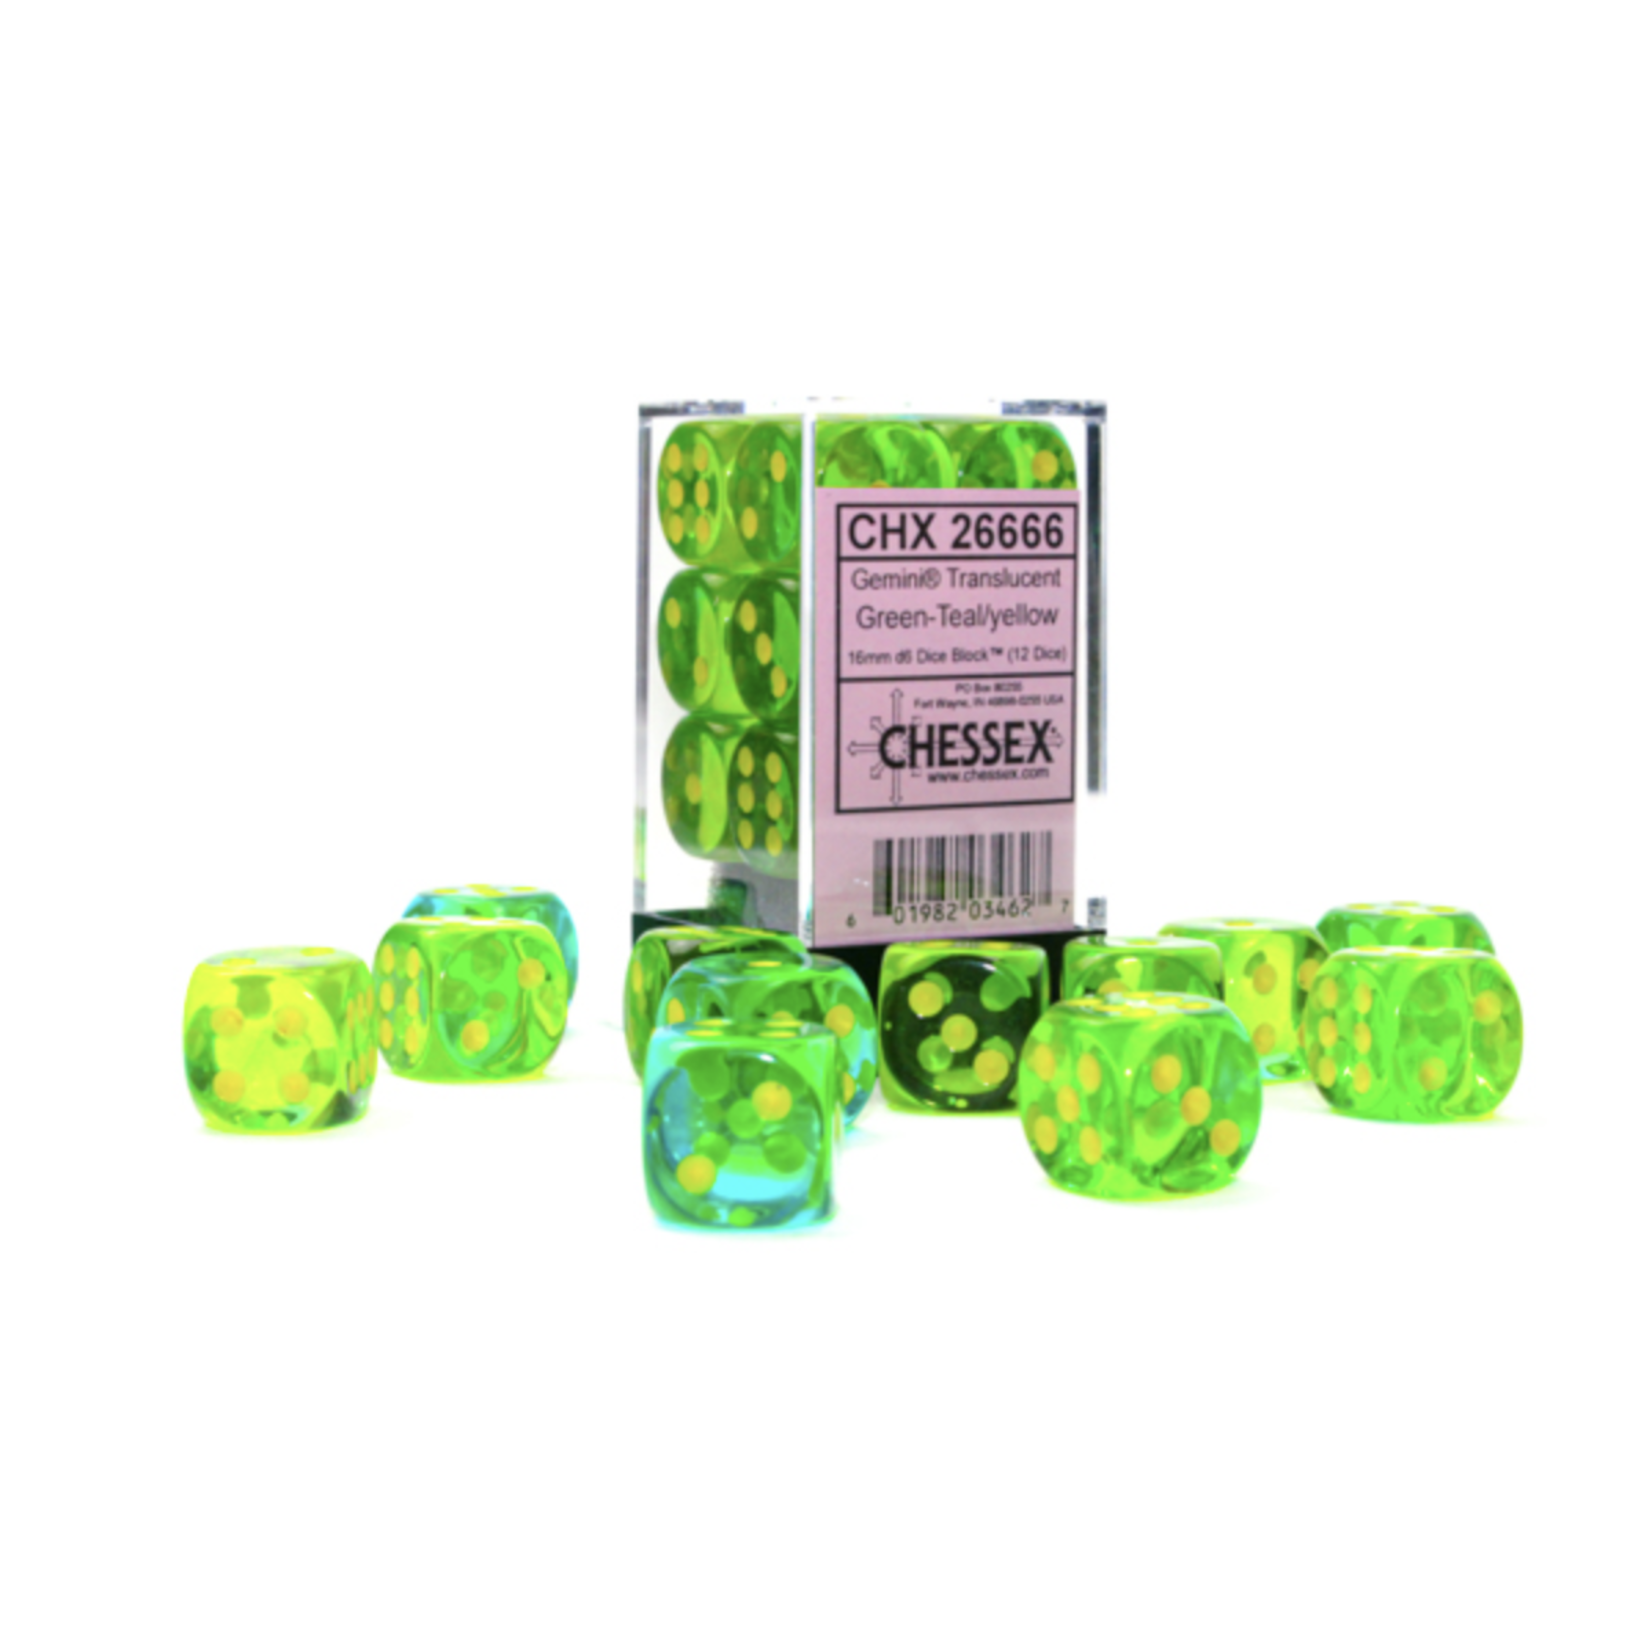 Chessex Gemini Translucent Green Teal Yellow 16mm d6